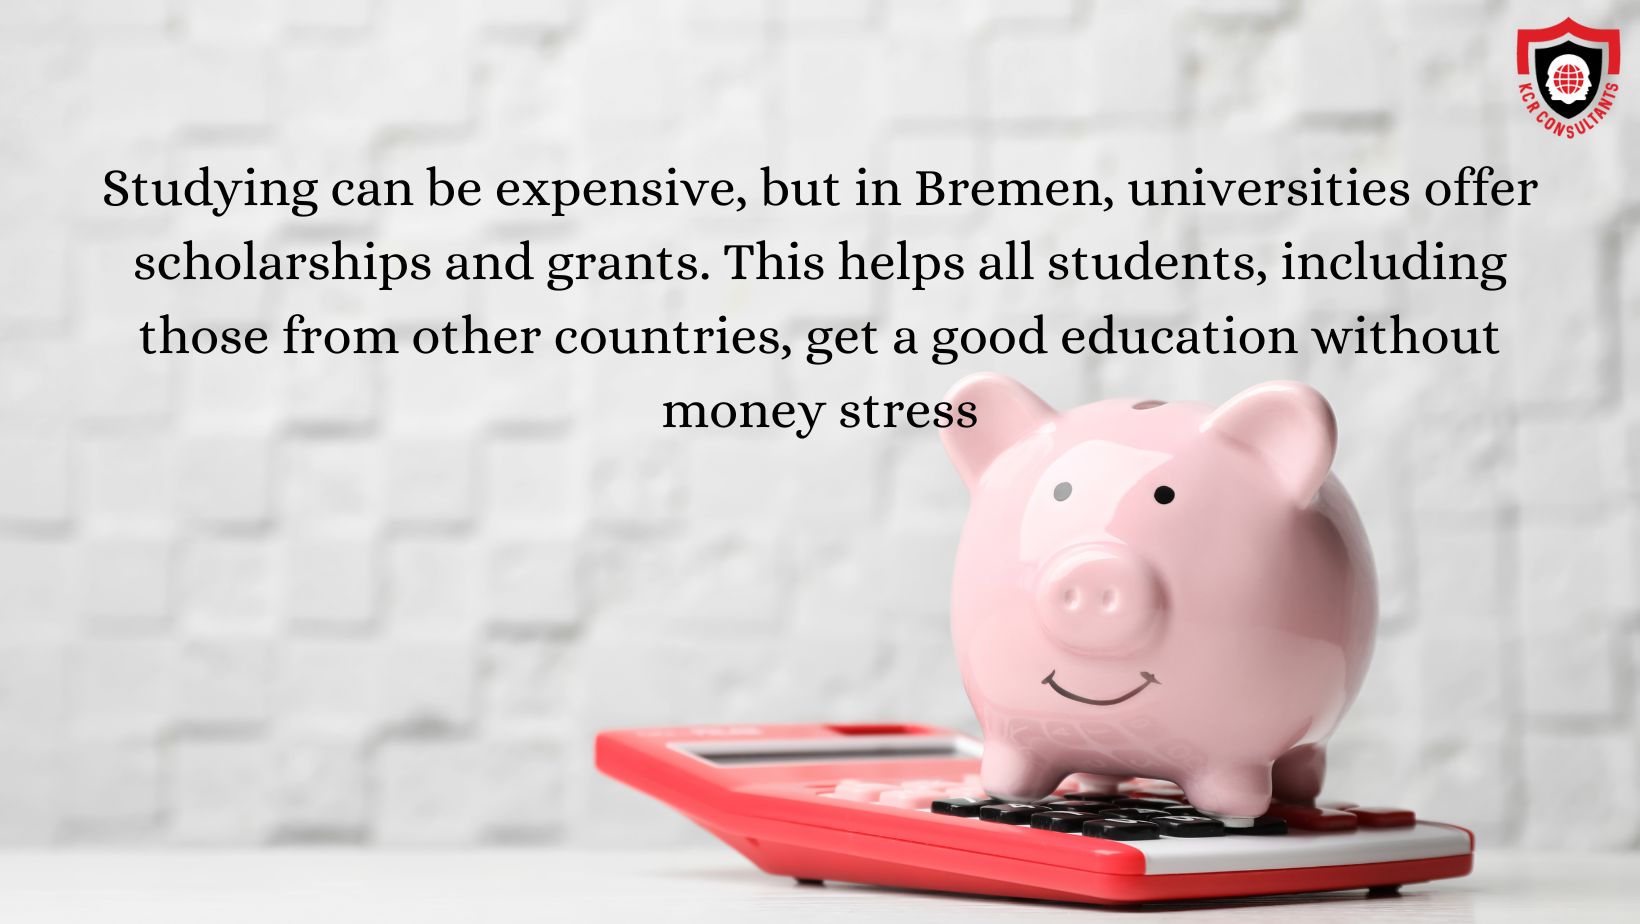 BREMEN - KCR CONSULTANTS - scholarships and grants